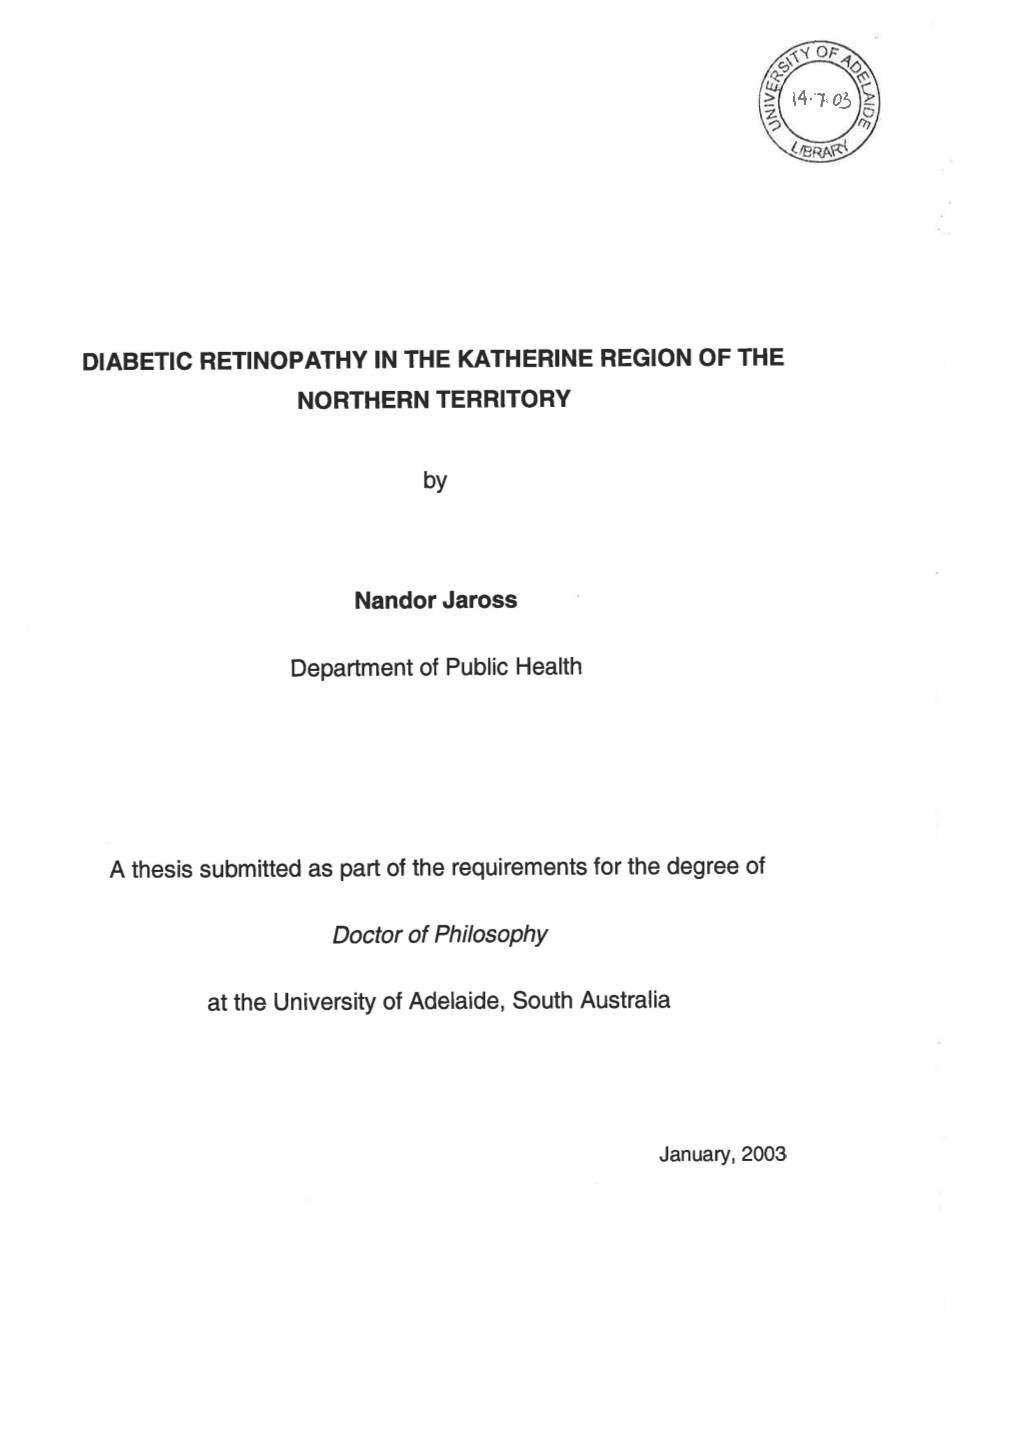 Diabetic Retinopathy in the Katherine Region of the Northern Territory